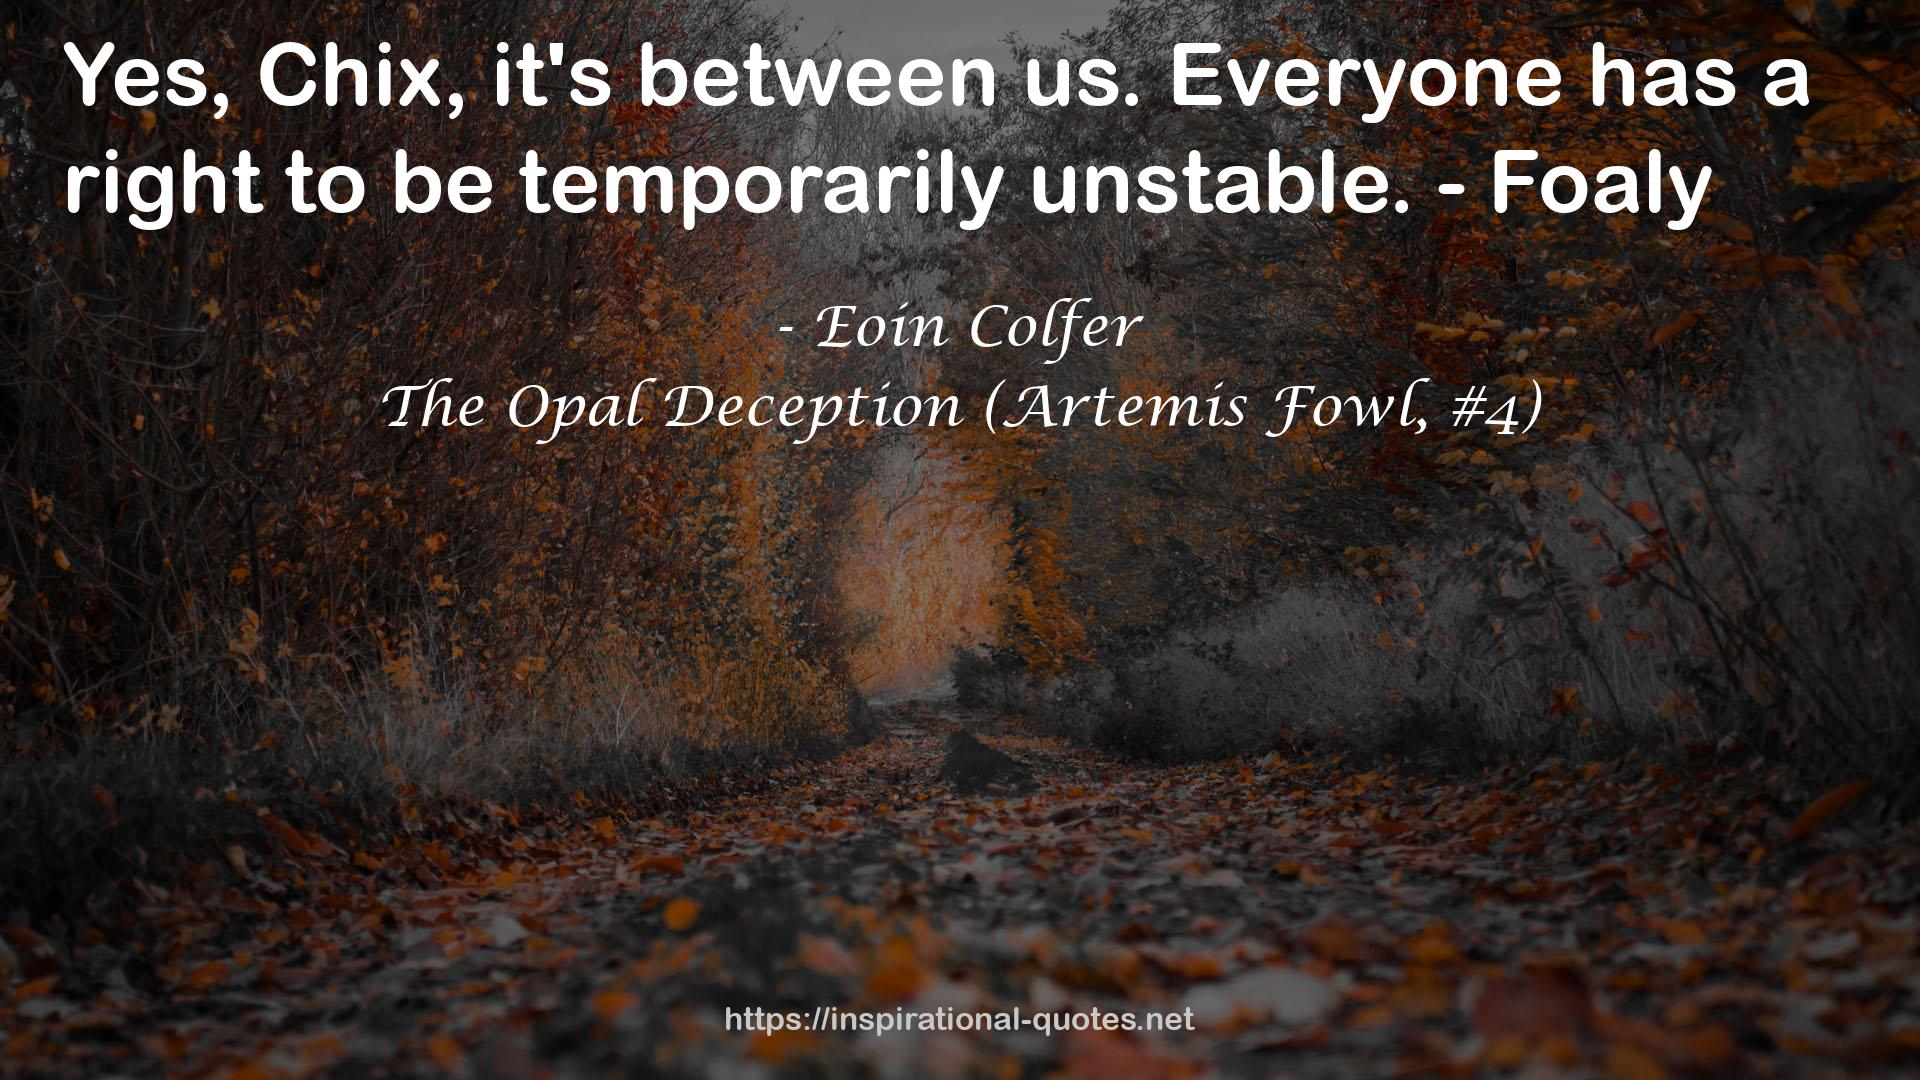 The Opal Deception (Artemis Fowl, #4) QUOTES